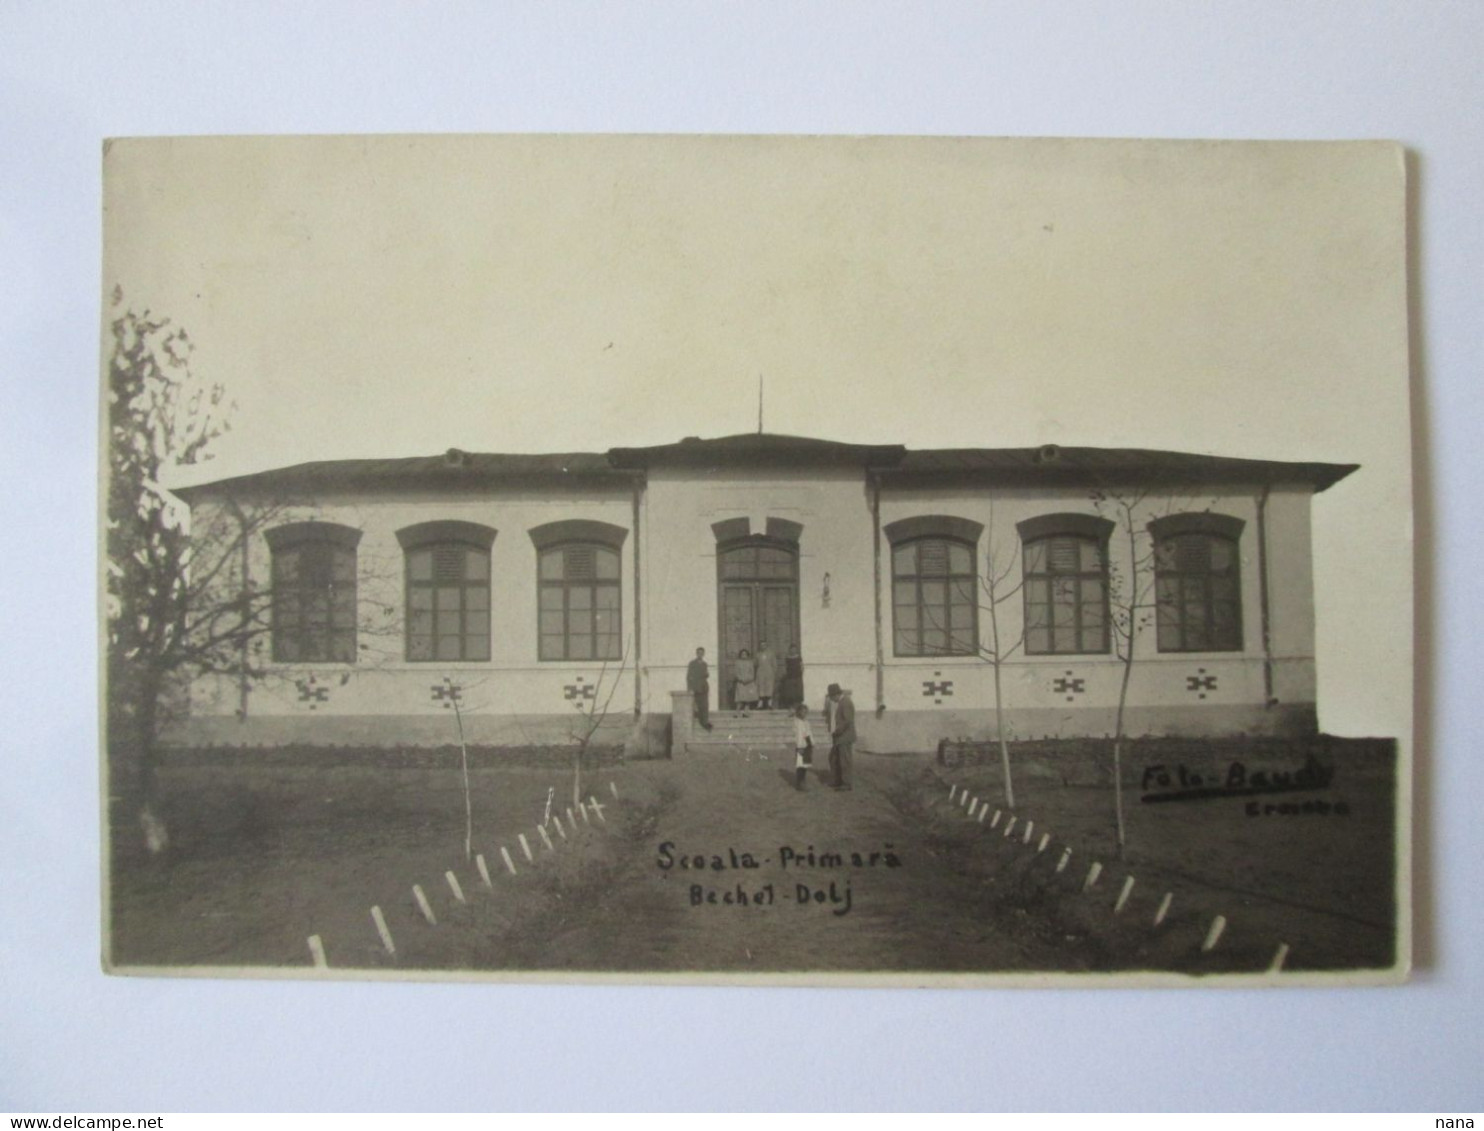 Rare! Romania-Bechet(Dolj):Ecole Primaire,carte Photo Voyage 1928/Primary School 1928 Written Photo Postcard - Rumänien